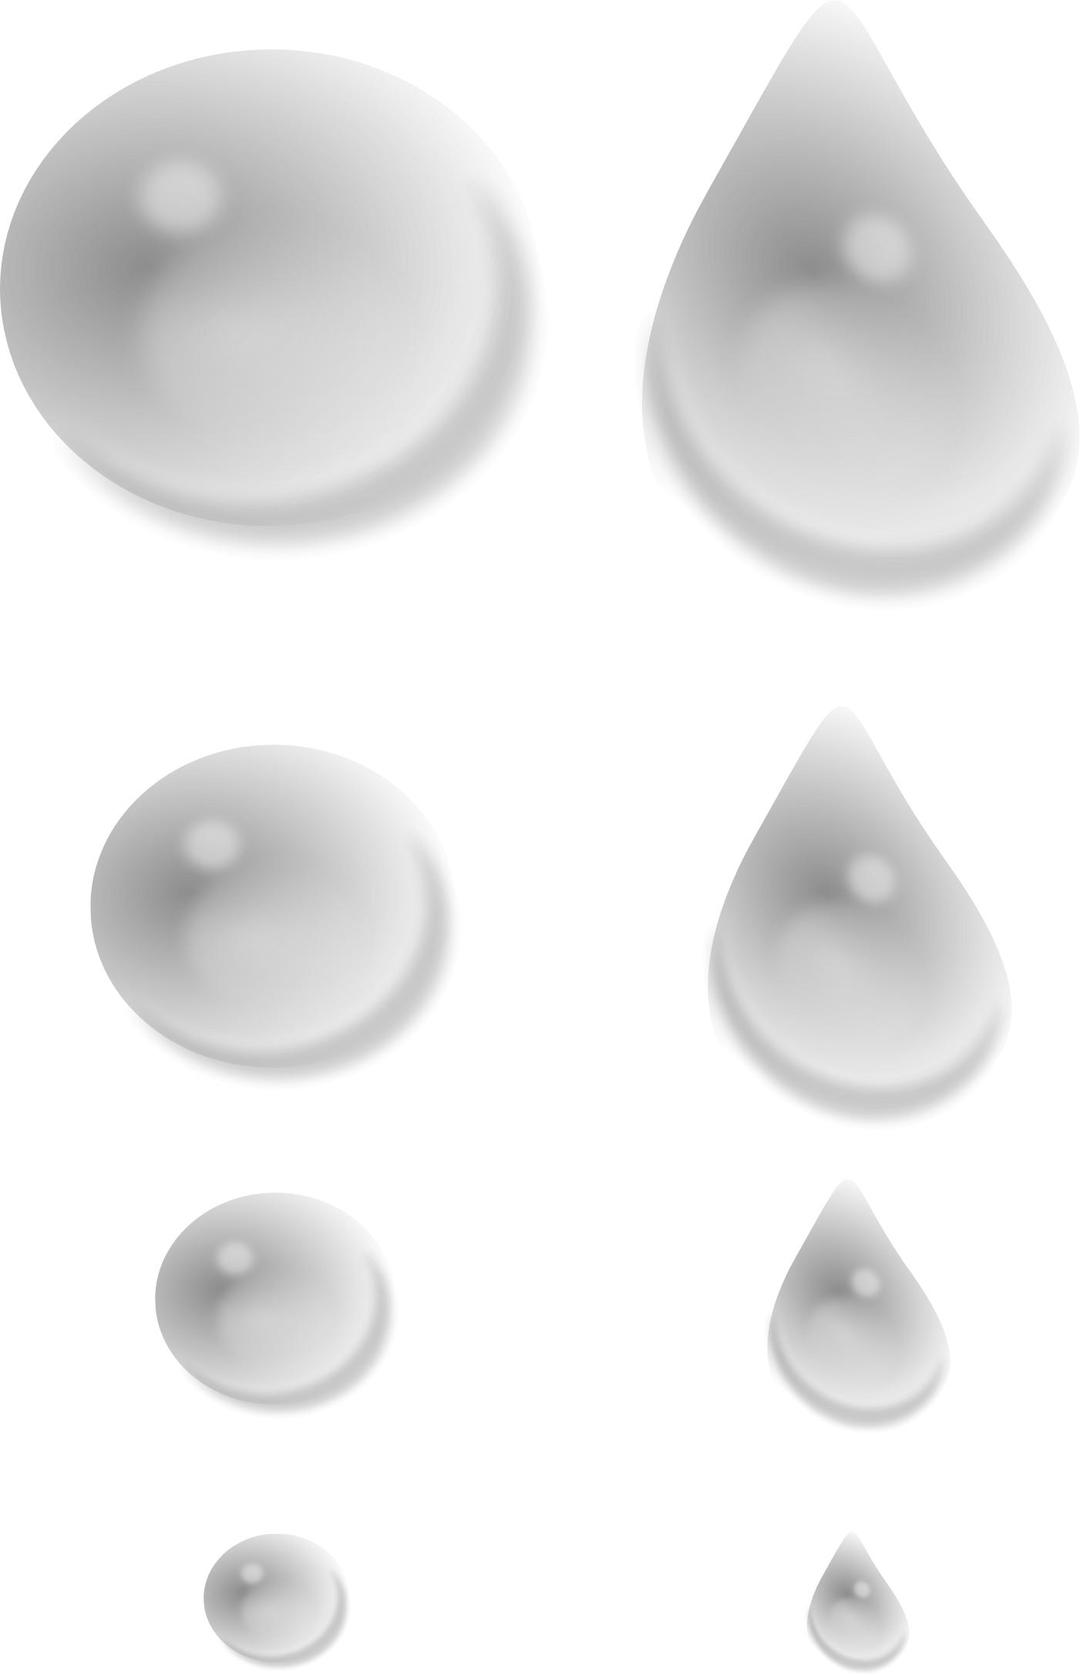 Water Drops png transparent